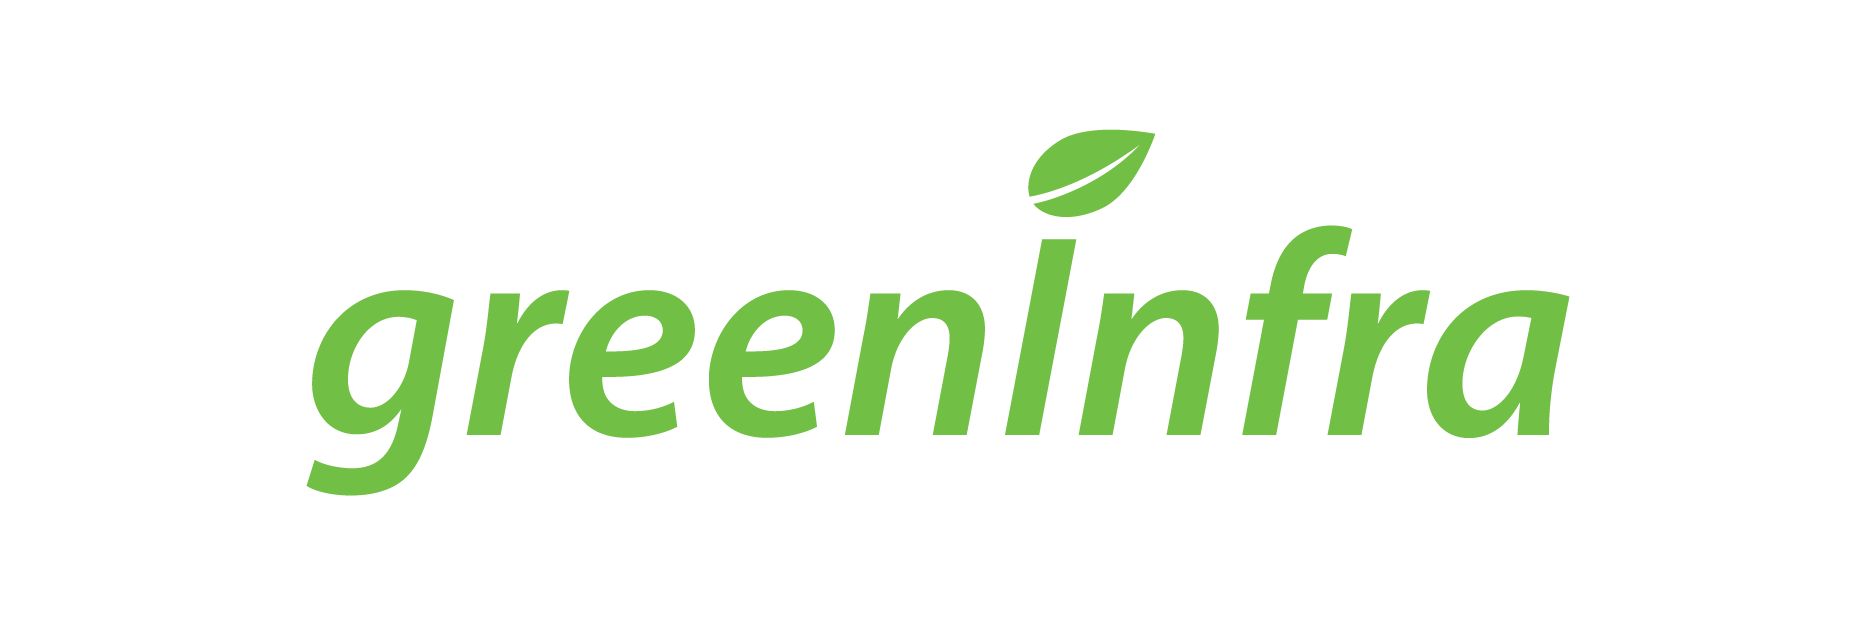 GreenInfra GmbH Logo